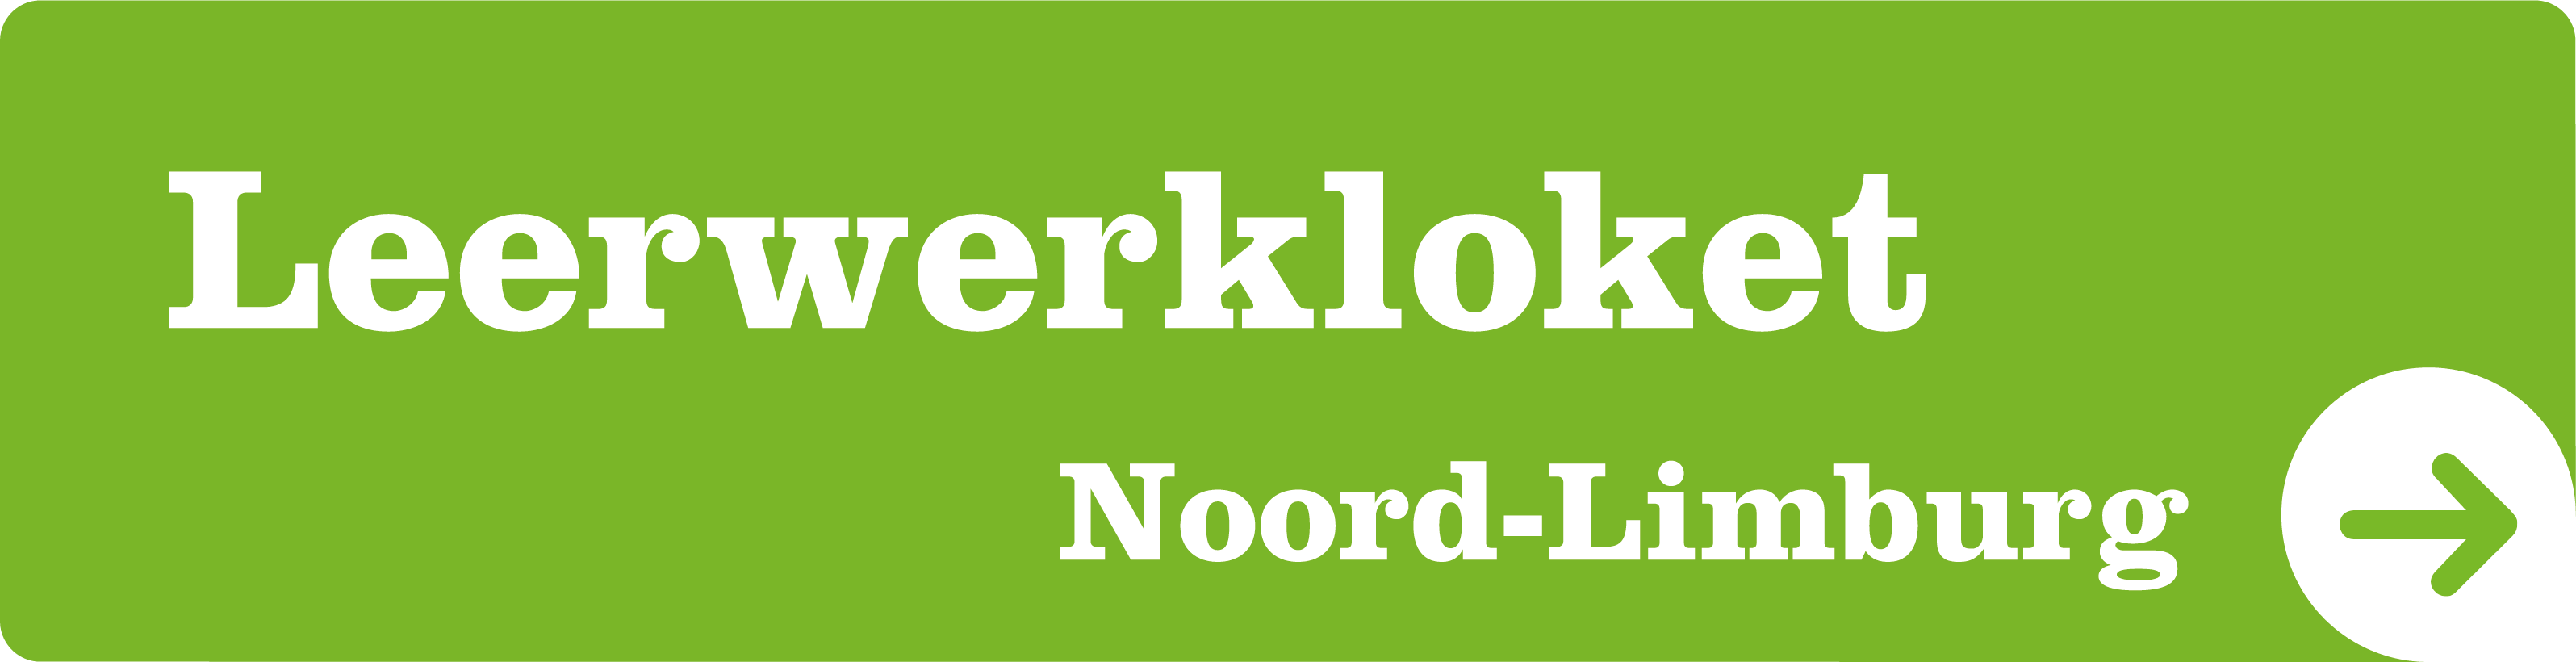 Leerwerkloket Noord-Limburg